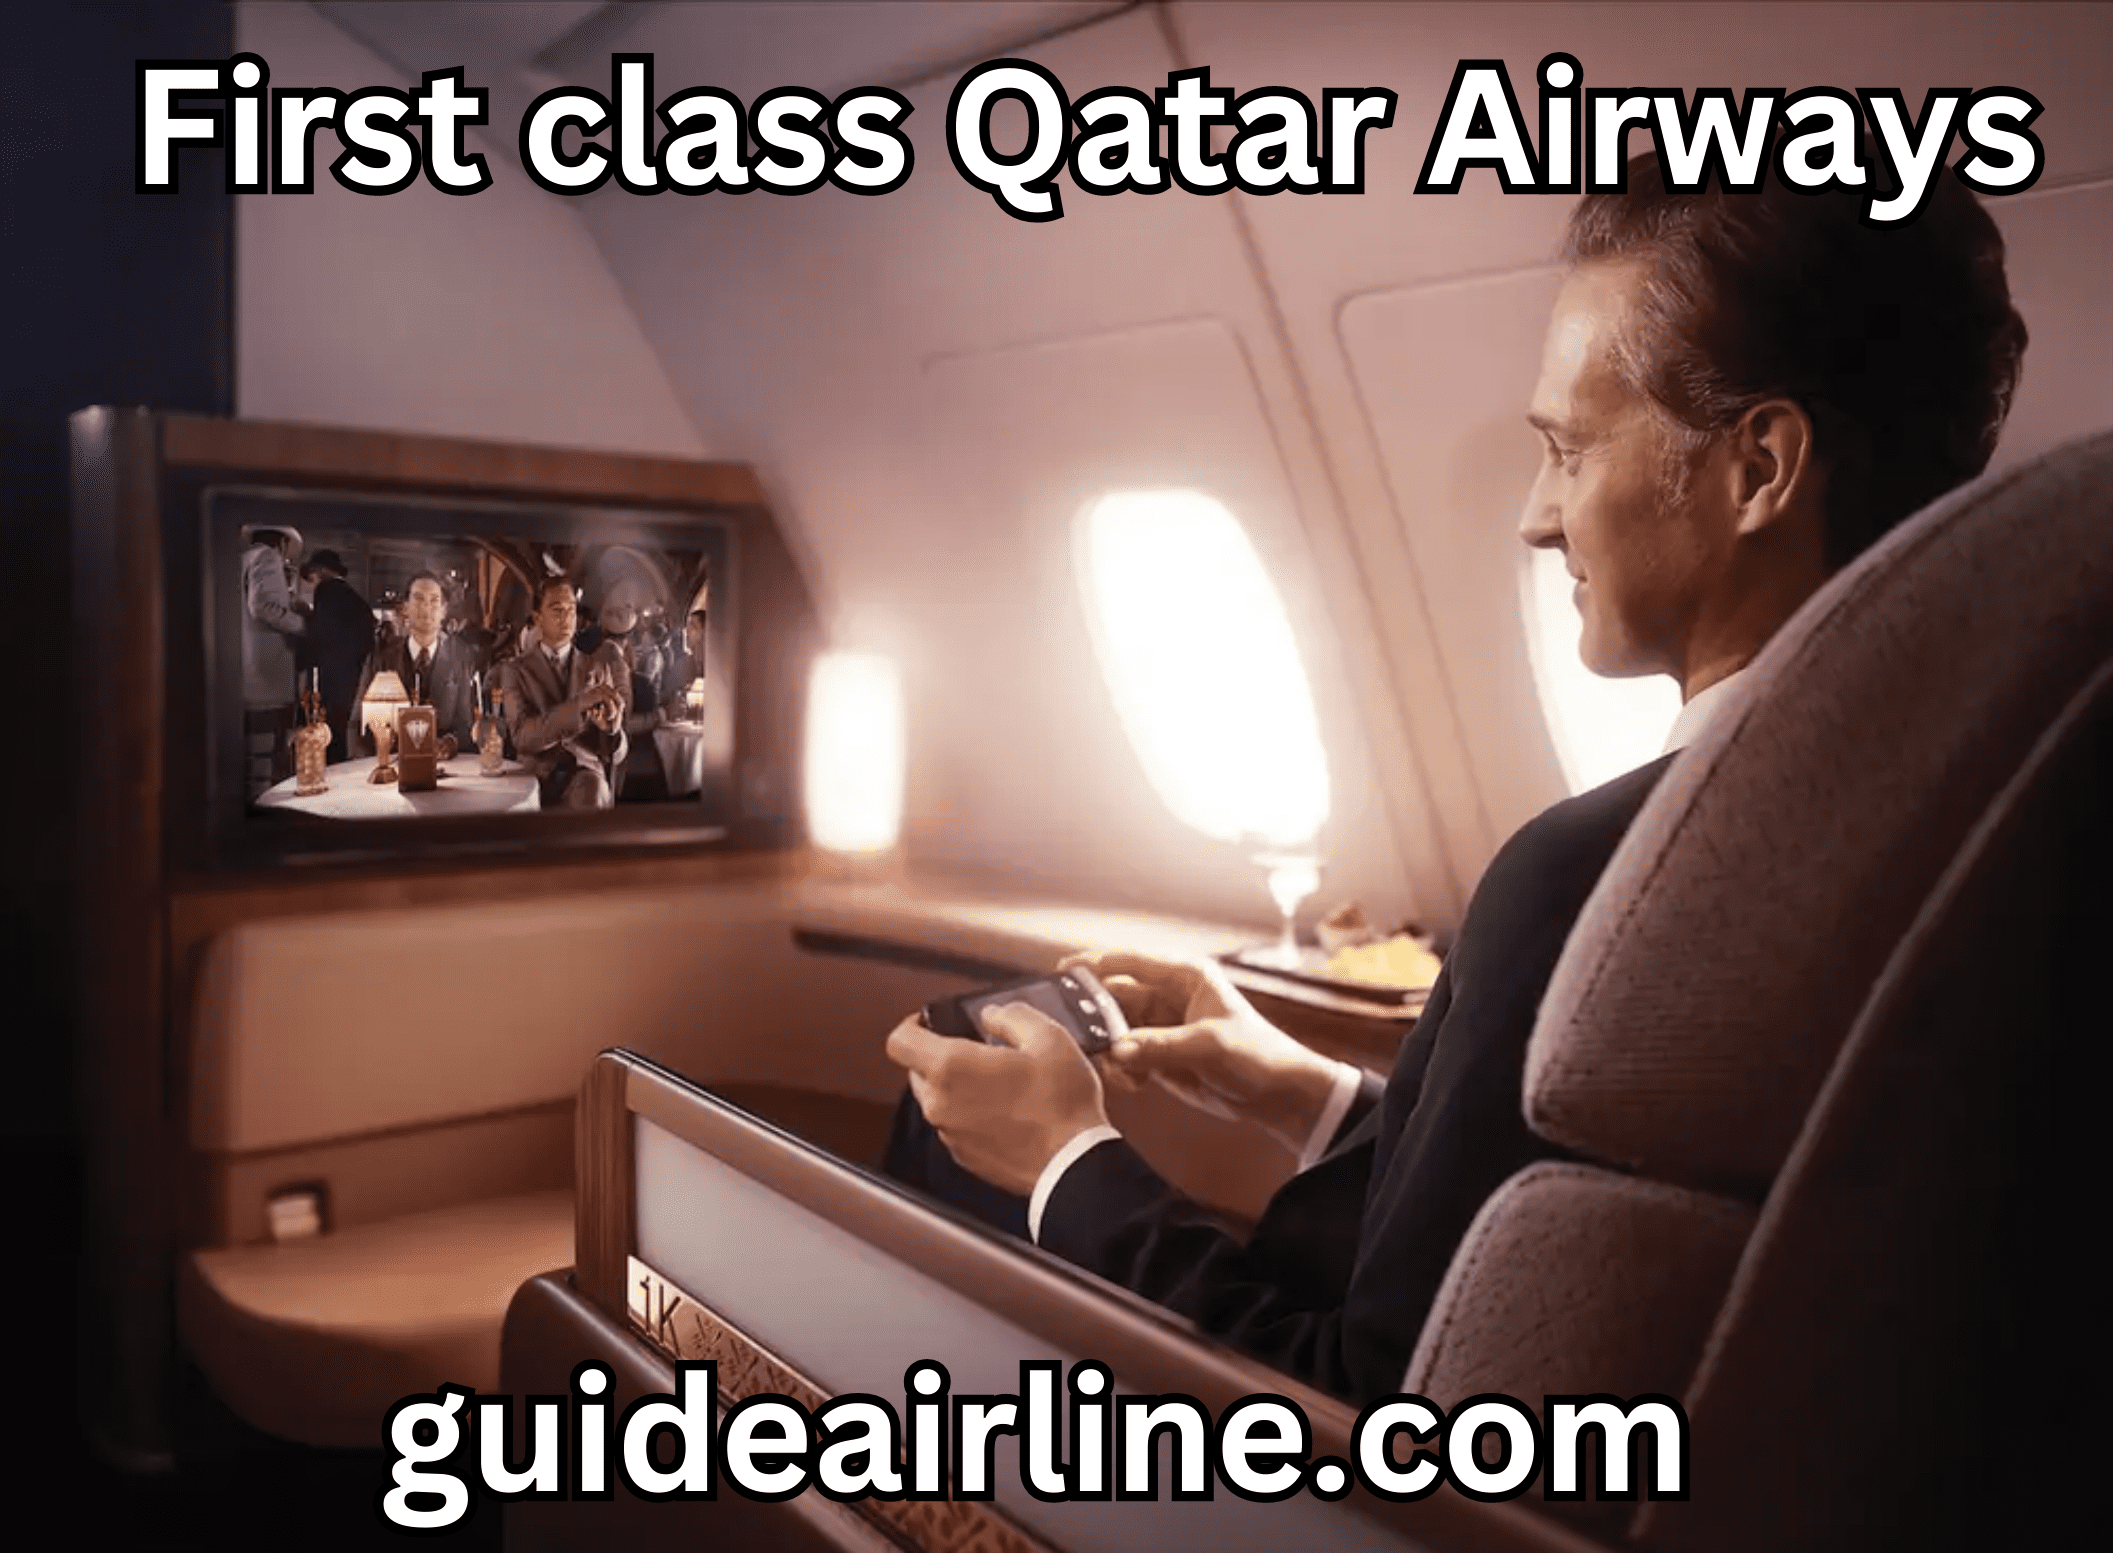 First class Qatar Airways